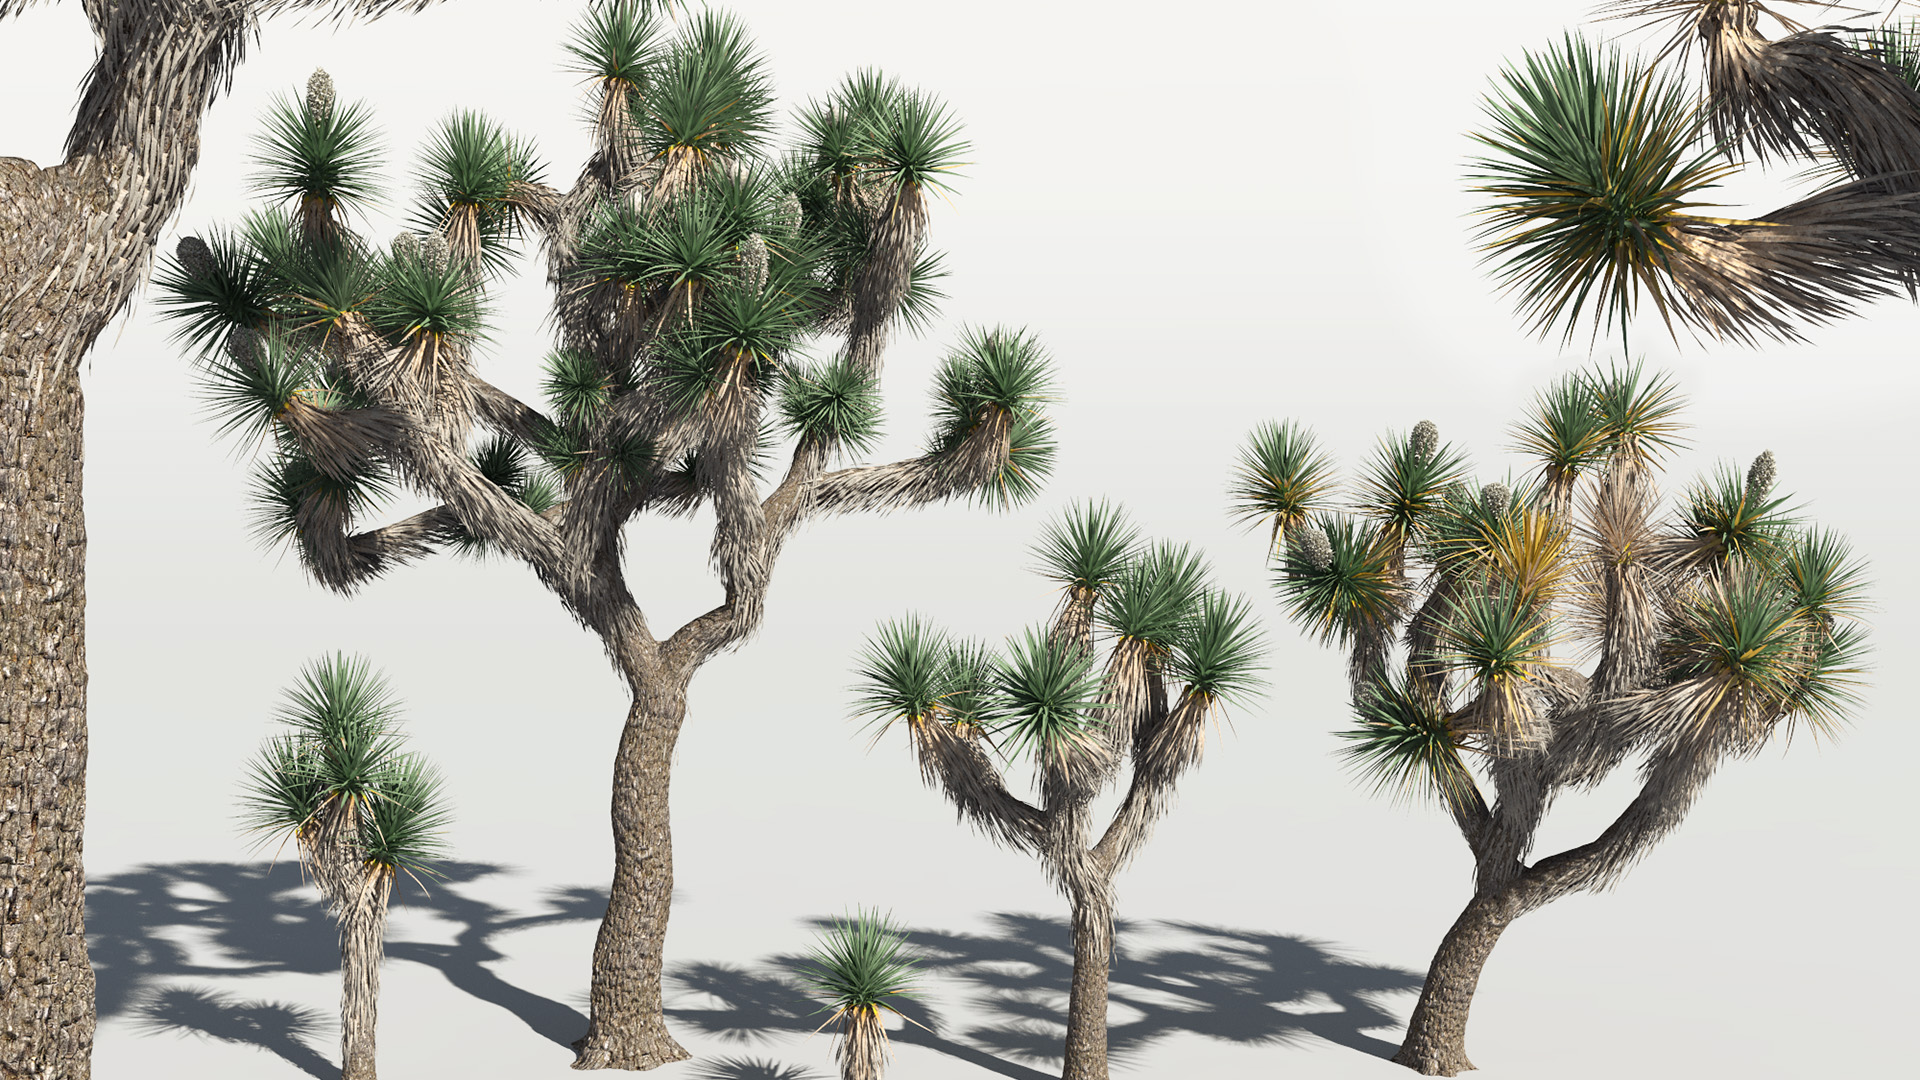 3D model of the Joshua tree Yucca brevifolia